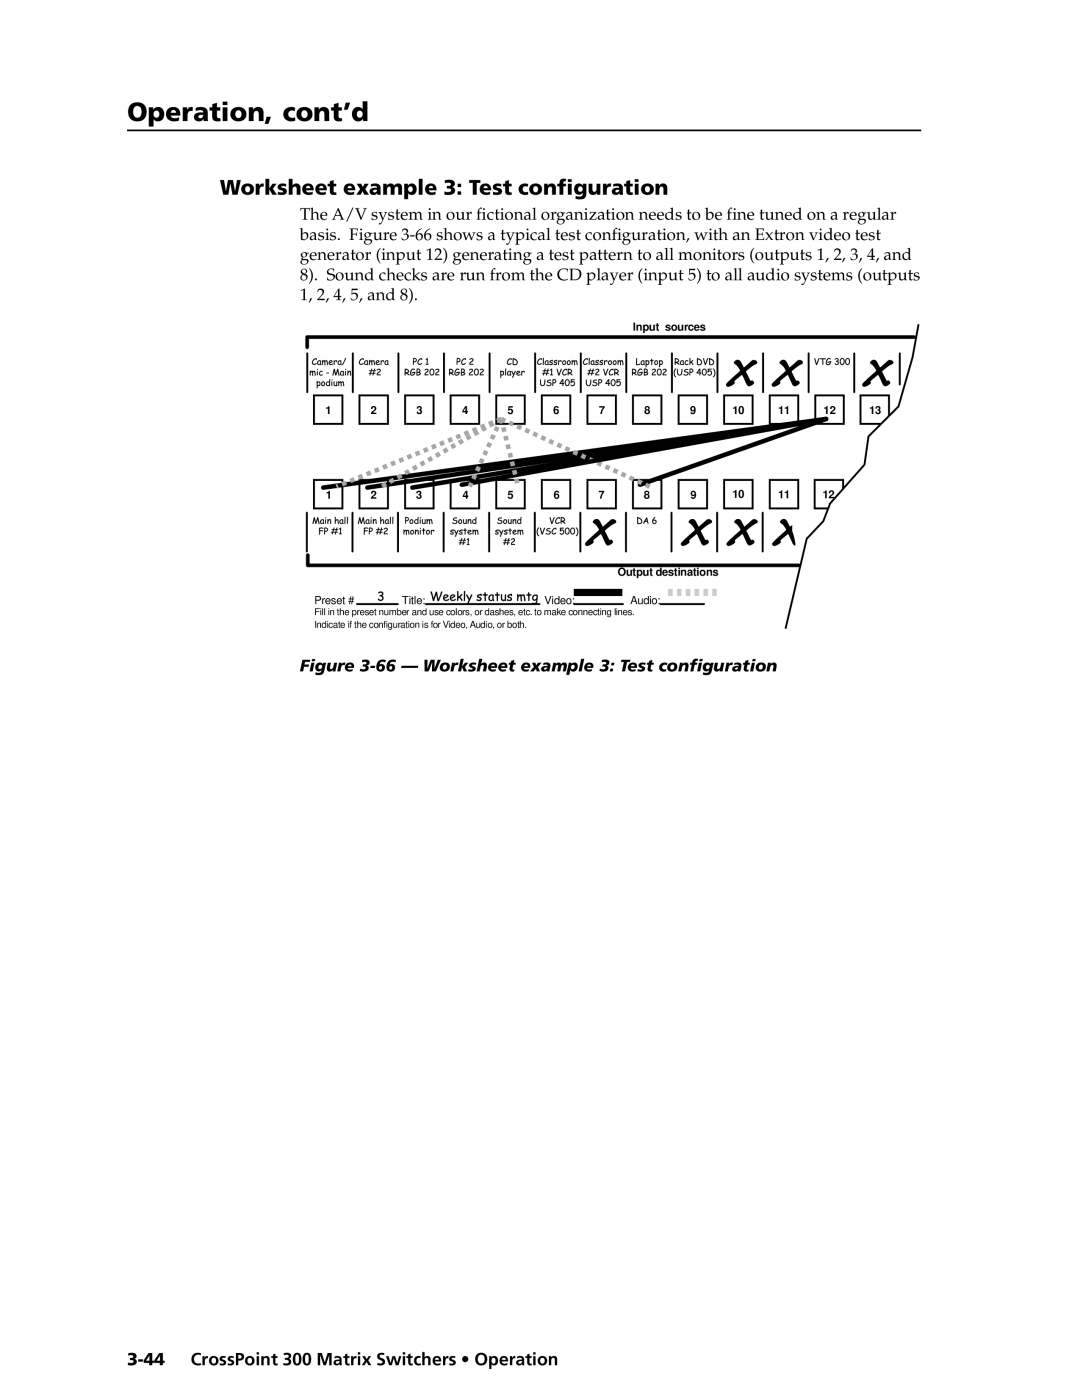 Extron electronic 168, 84, 1616 66 - Worksheet example 3 Test configuration, CrossPoint 300 Matrix Switchers Operation 